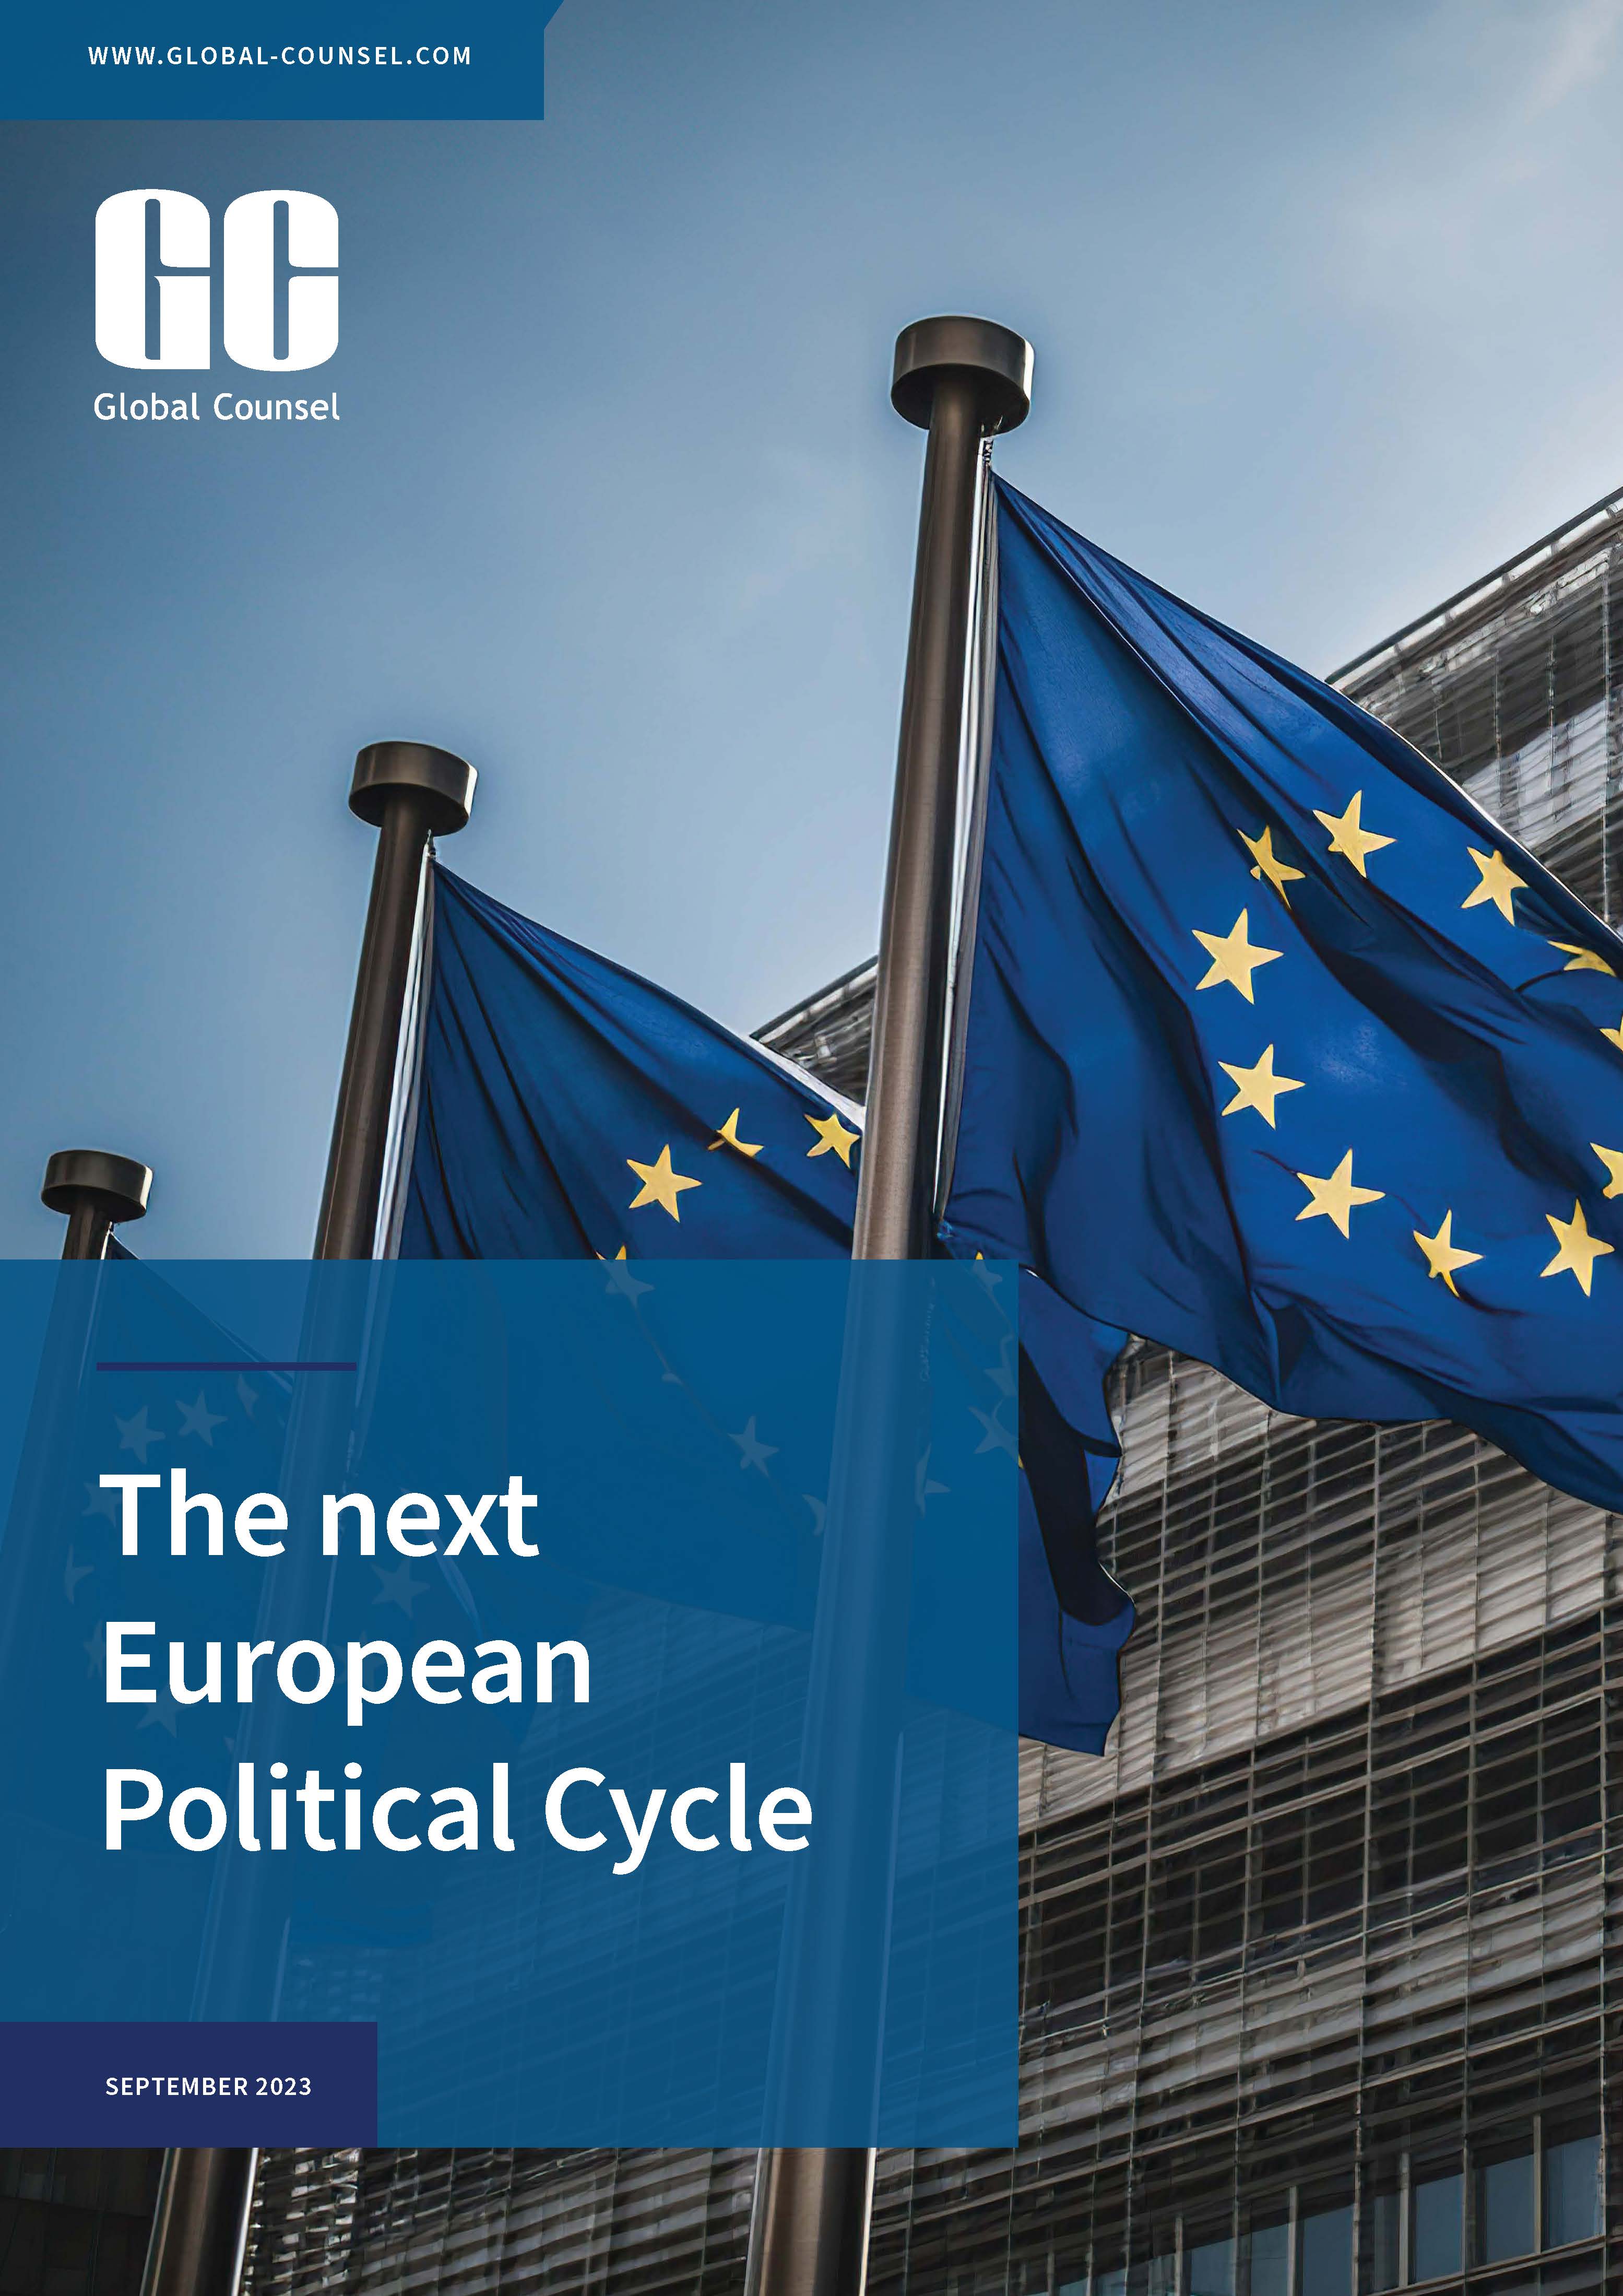 The next European Political Cycle